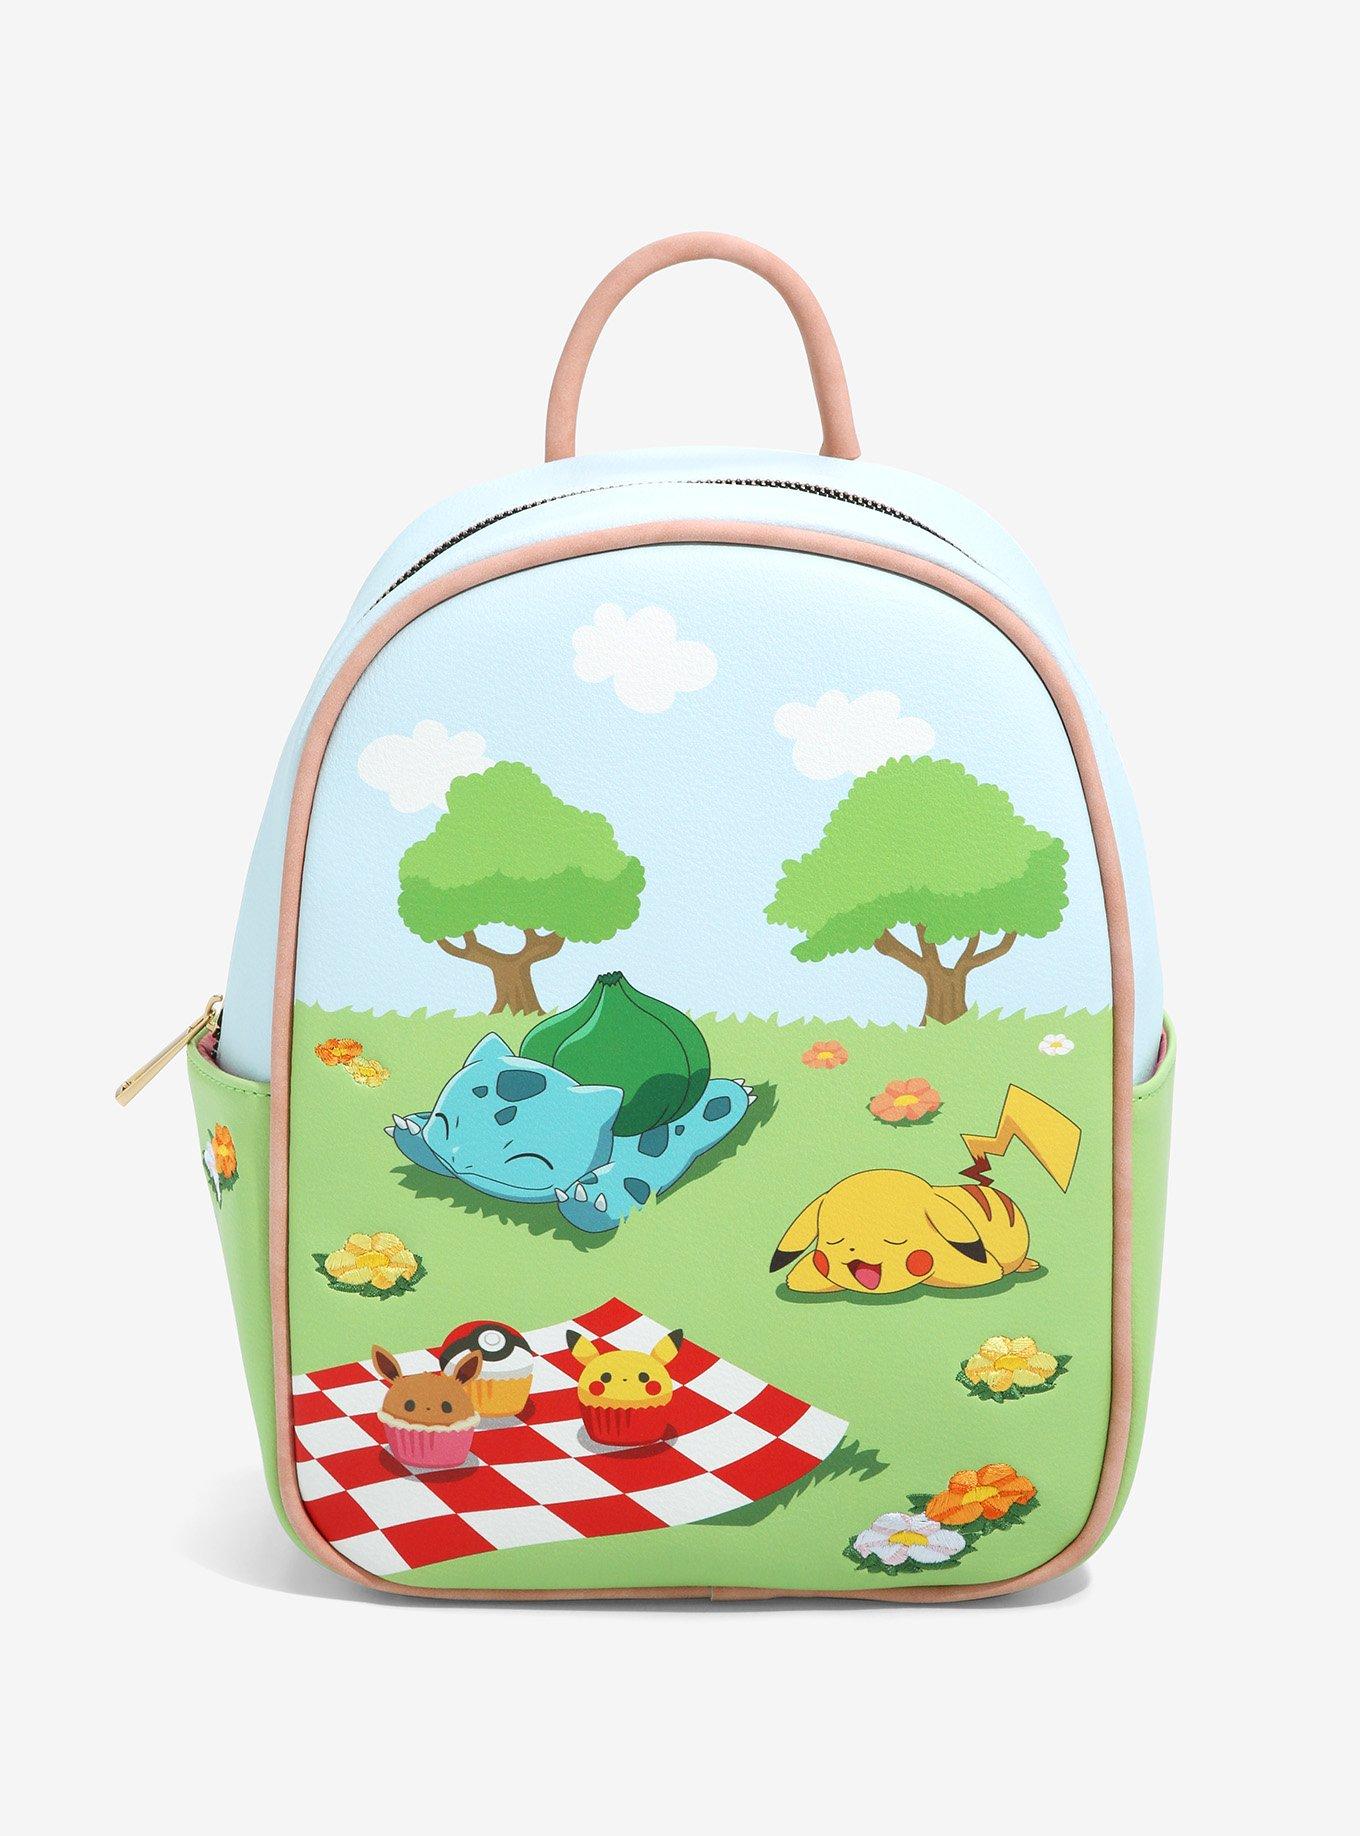 Buy the Loungefly Pokemon Bulbasaur Mini Backpack